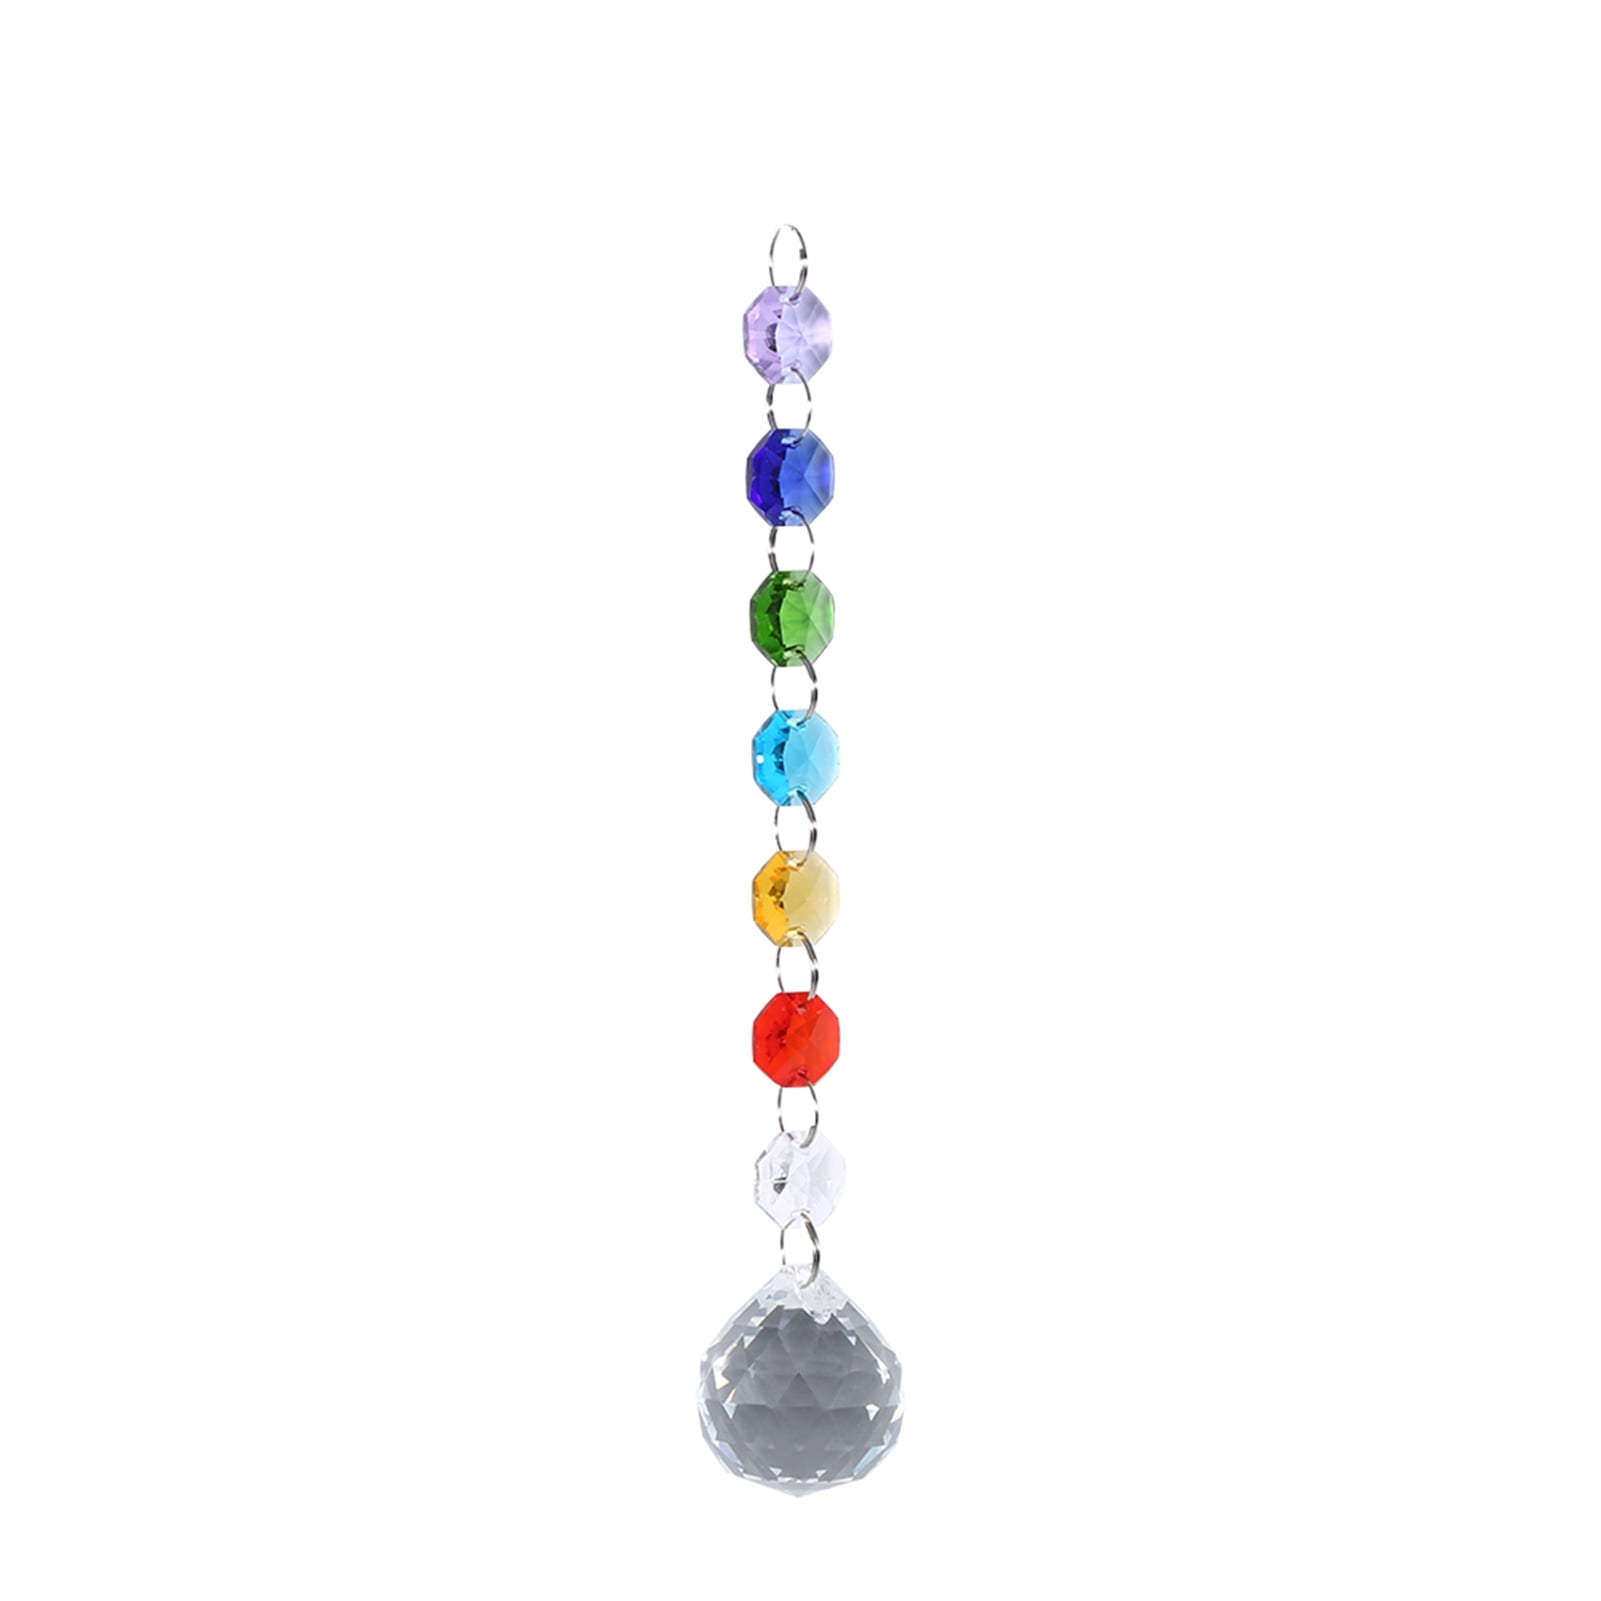 Rainbow Crystal Suncatcher Chandelier Lamp Prism Hanging Pendant Home Decor NEW 